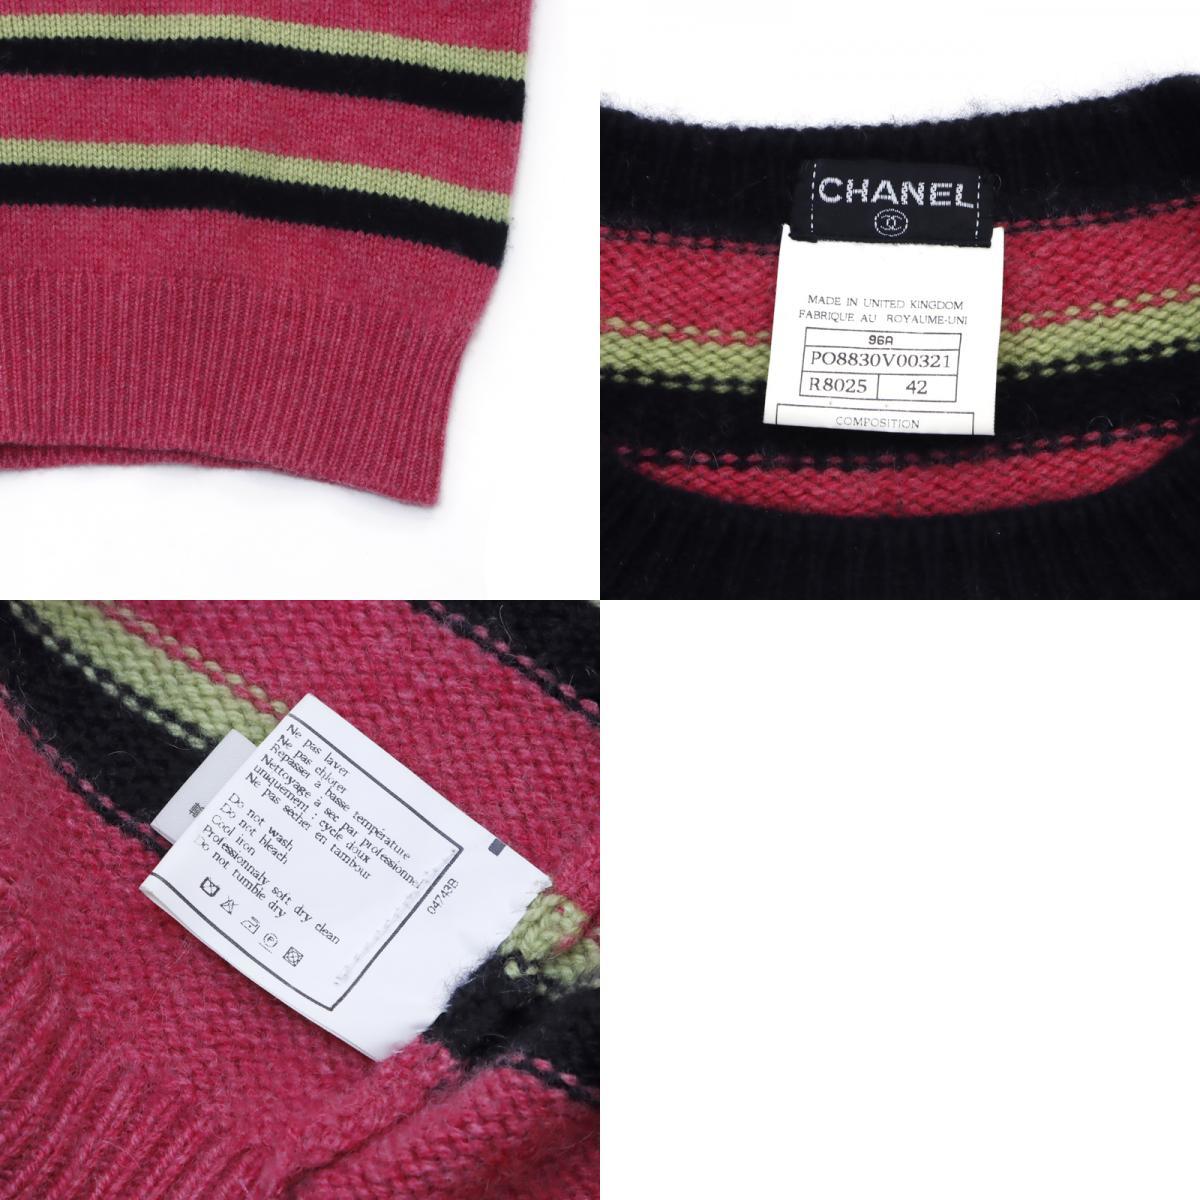  Chanel CHANEL ensemble knitted ensemble 1996 year cashmere pink × green × black 